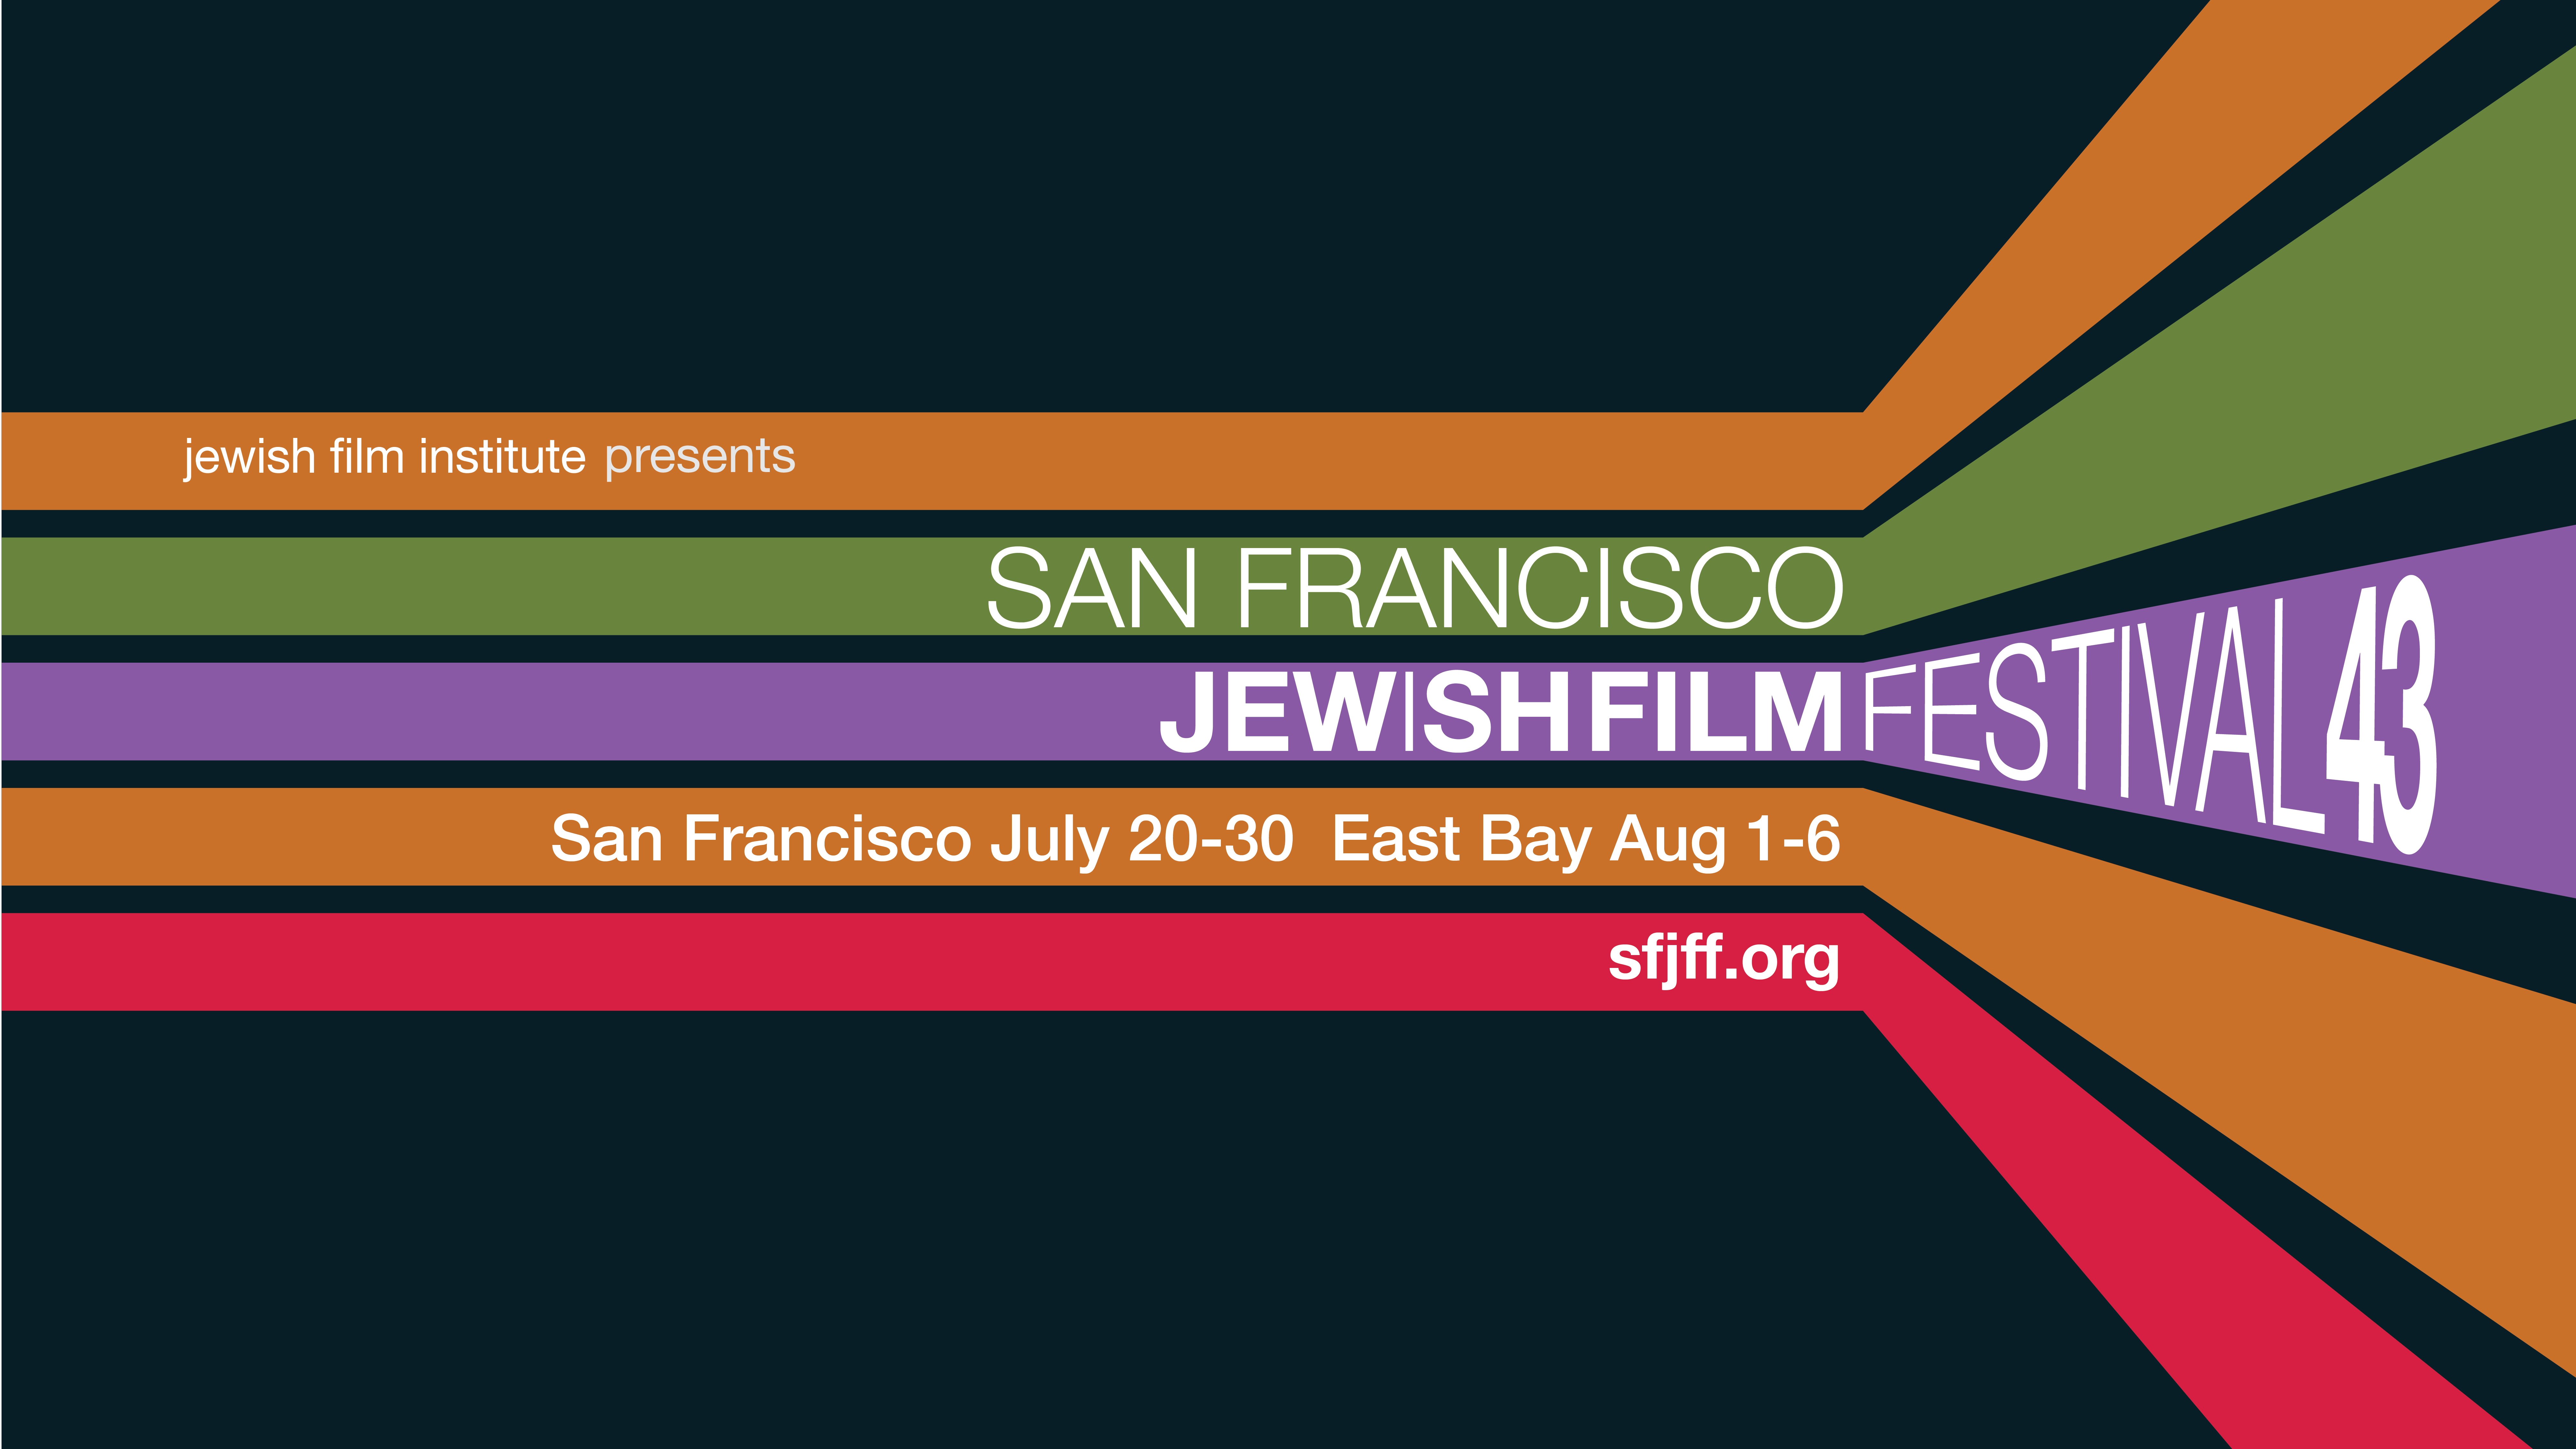 San Francisco Jewish Film Festival 43